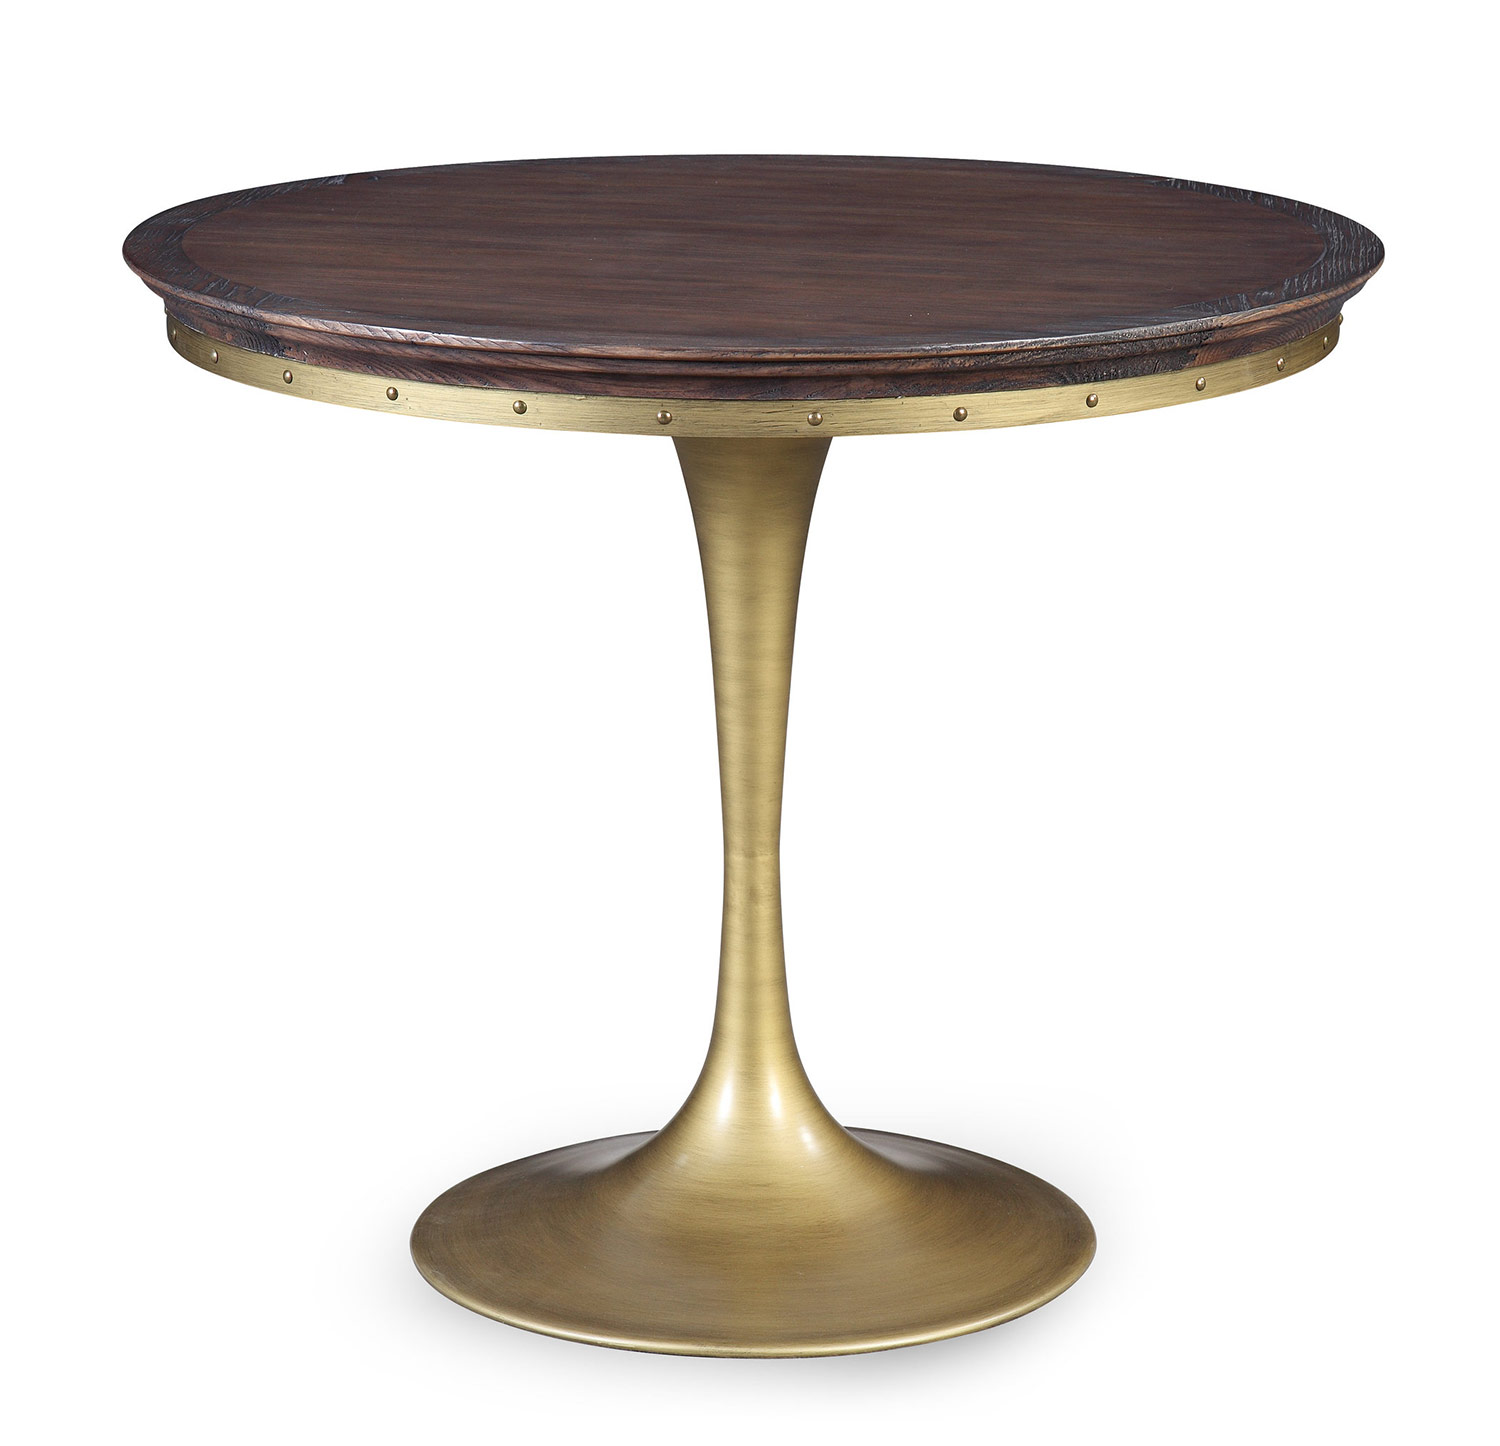 TOV Furniture Alfie Pine Table - Rustique top/Brushed brass base